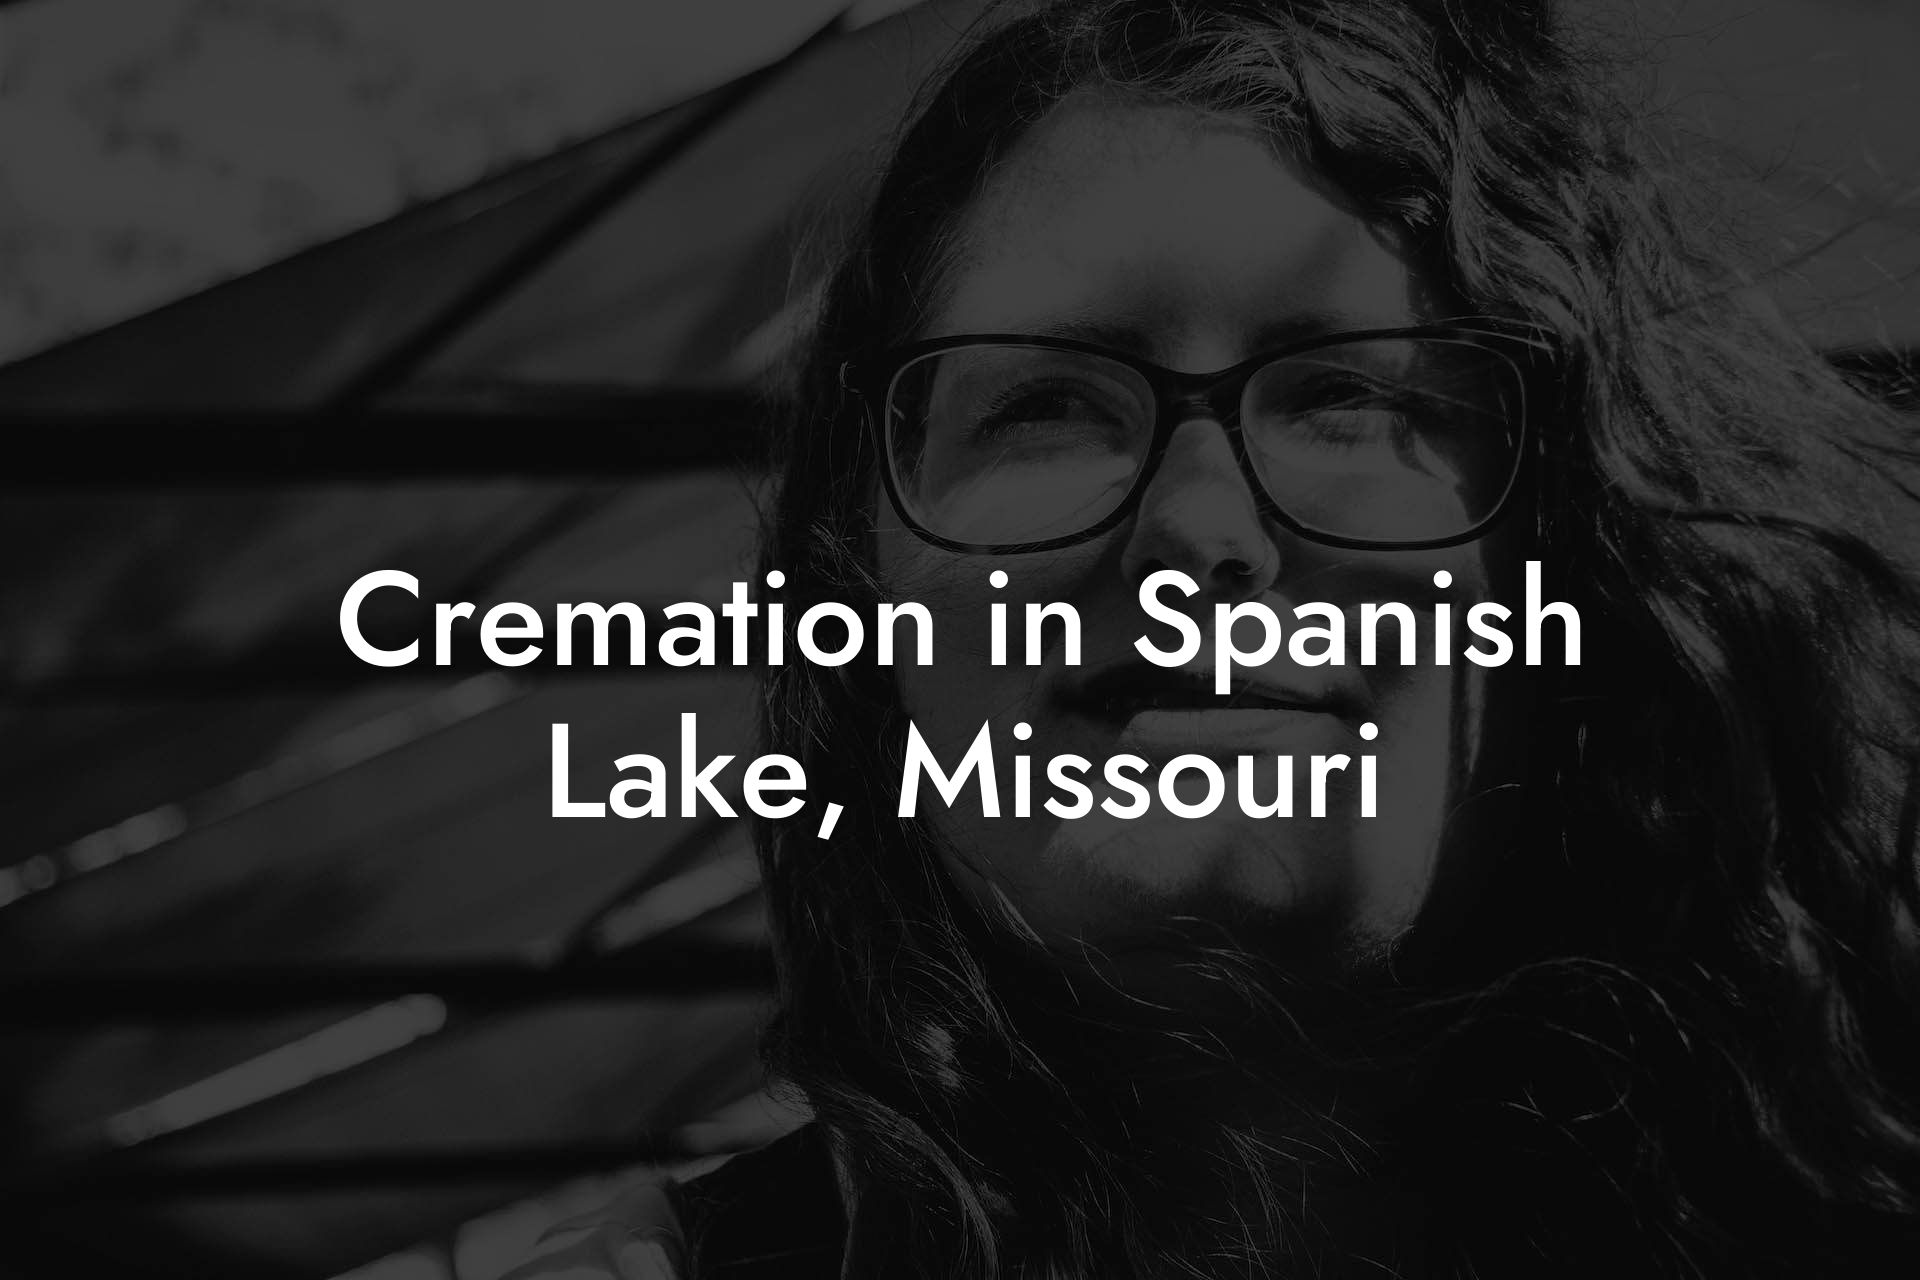 Cremation in Spanish Lake, Missouri